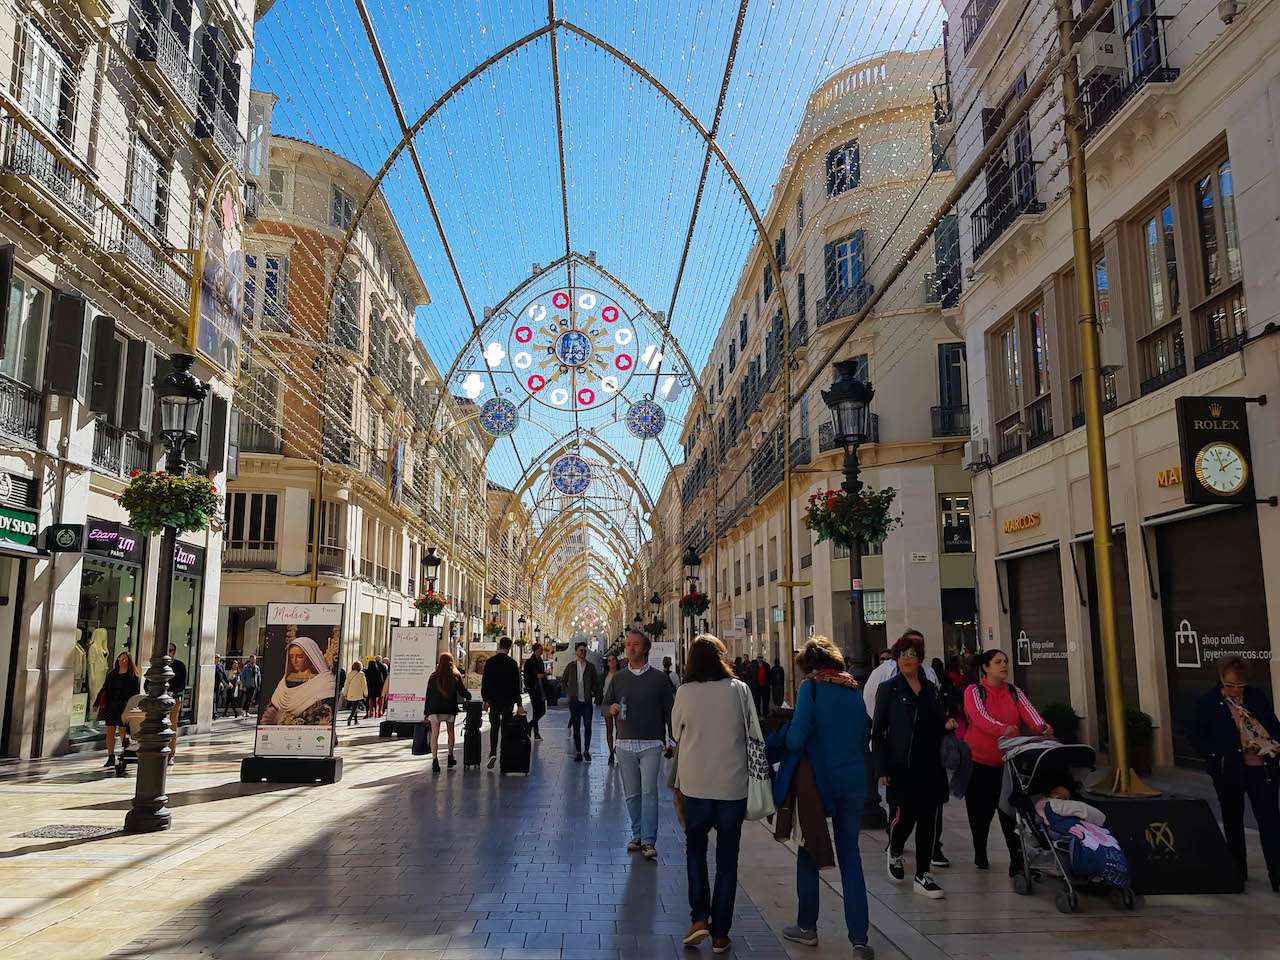 Malaga verlicht decoratie in het stadscentrum online puzzel